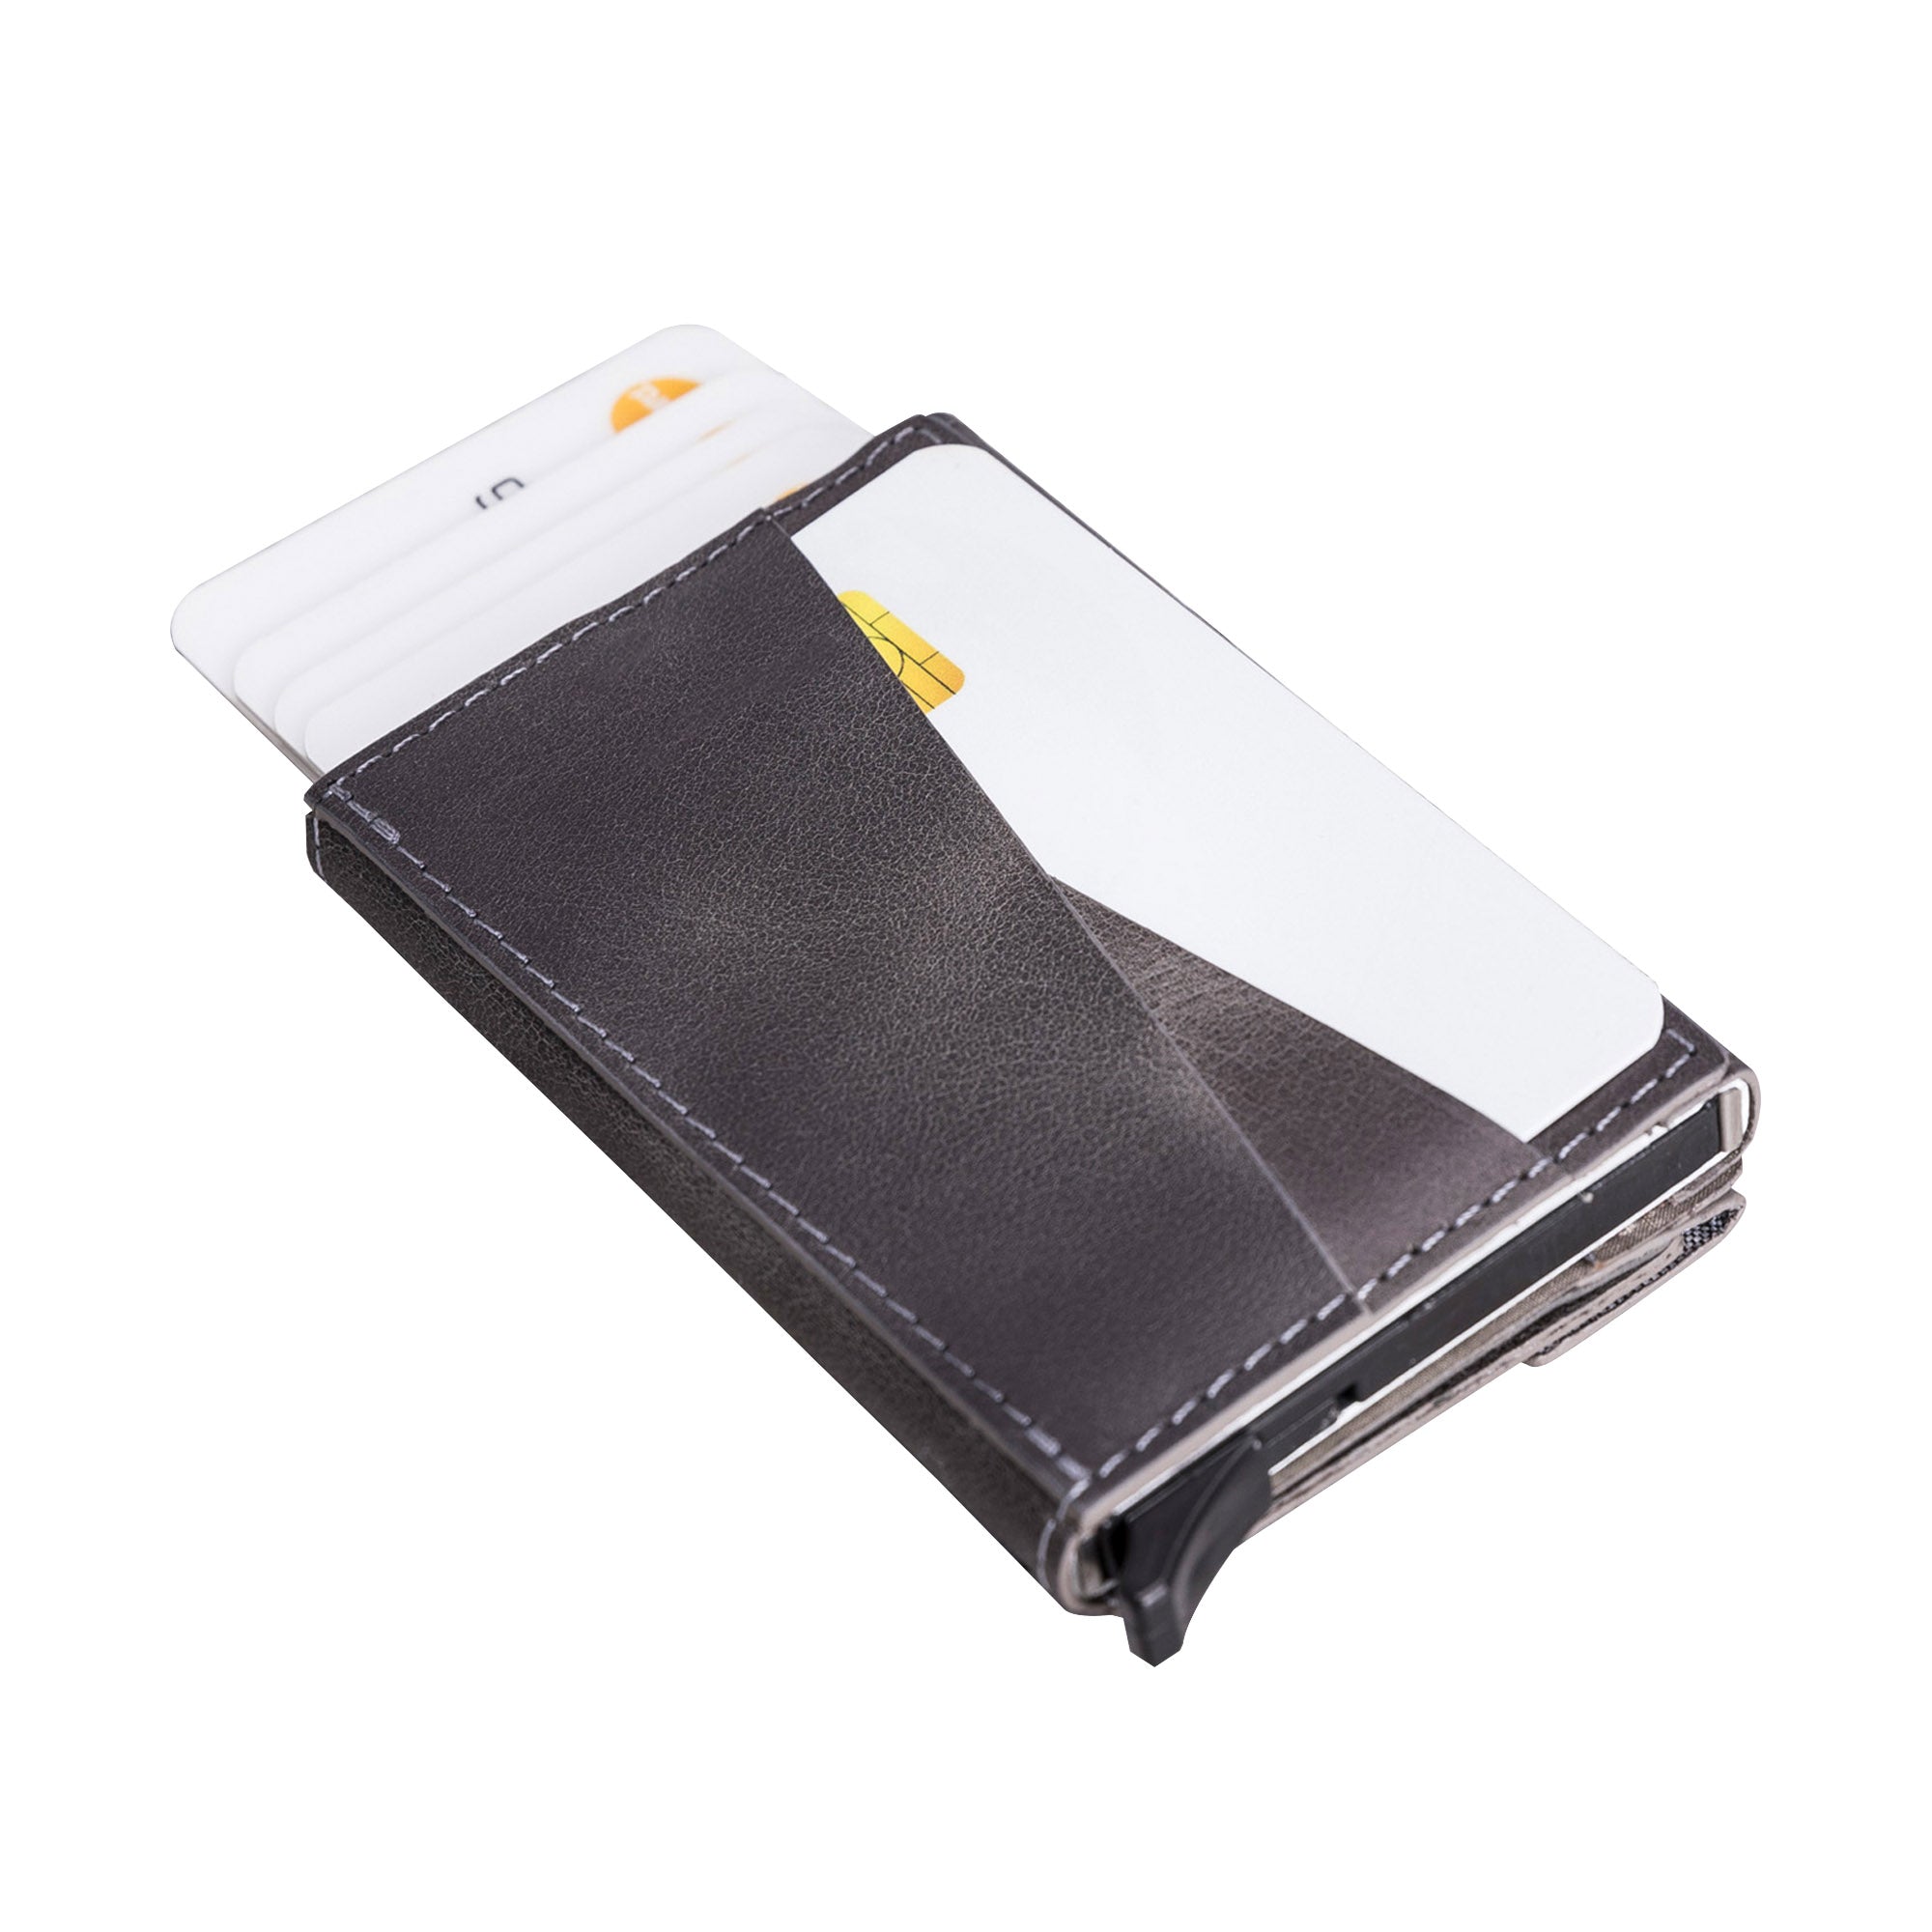 Envelope RFID Blocker Mechanism Pop Up Leather Business / Credit Card Holder - GRAY - saracleather